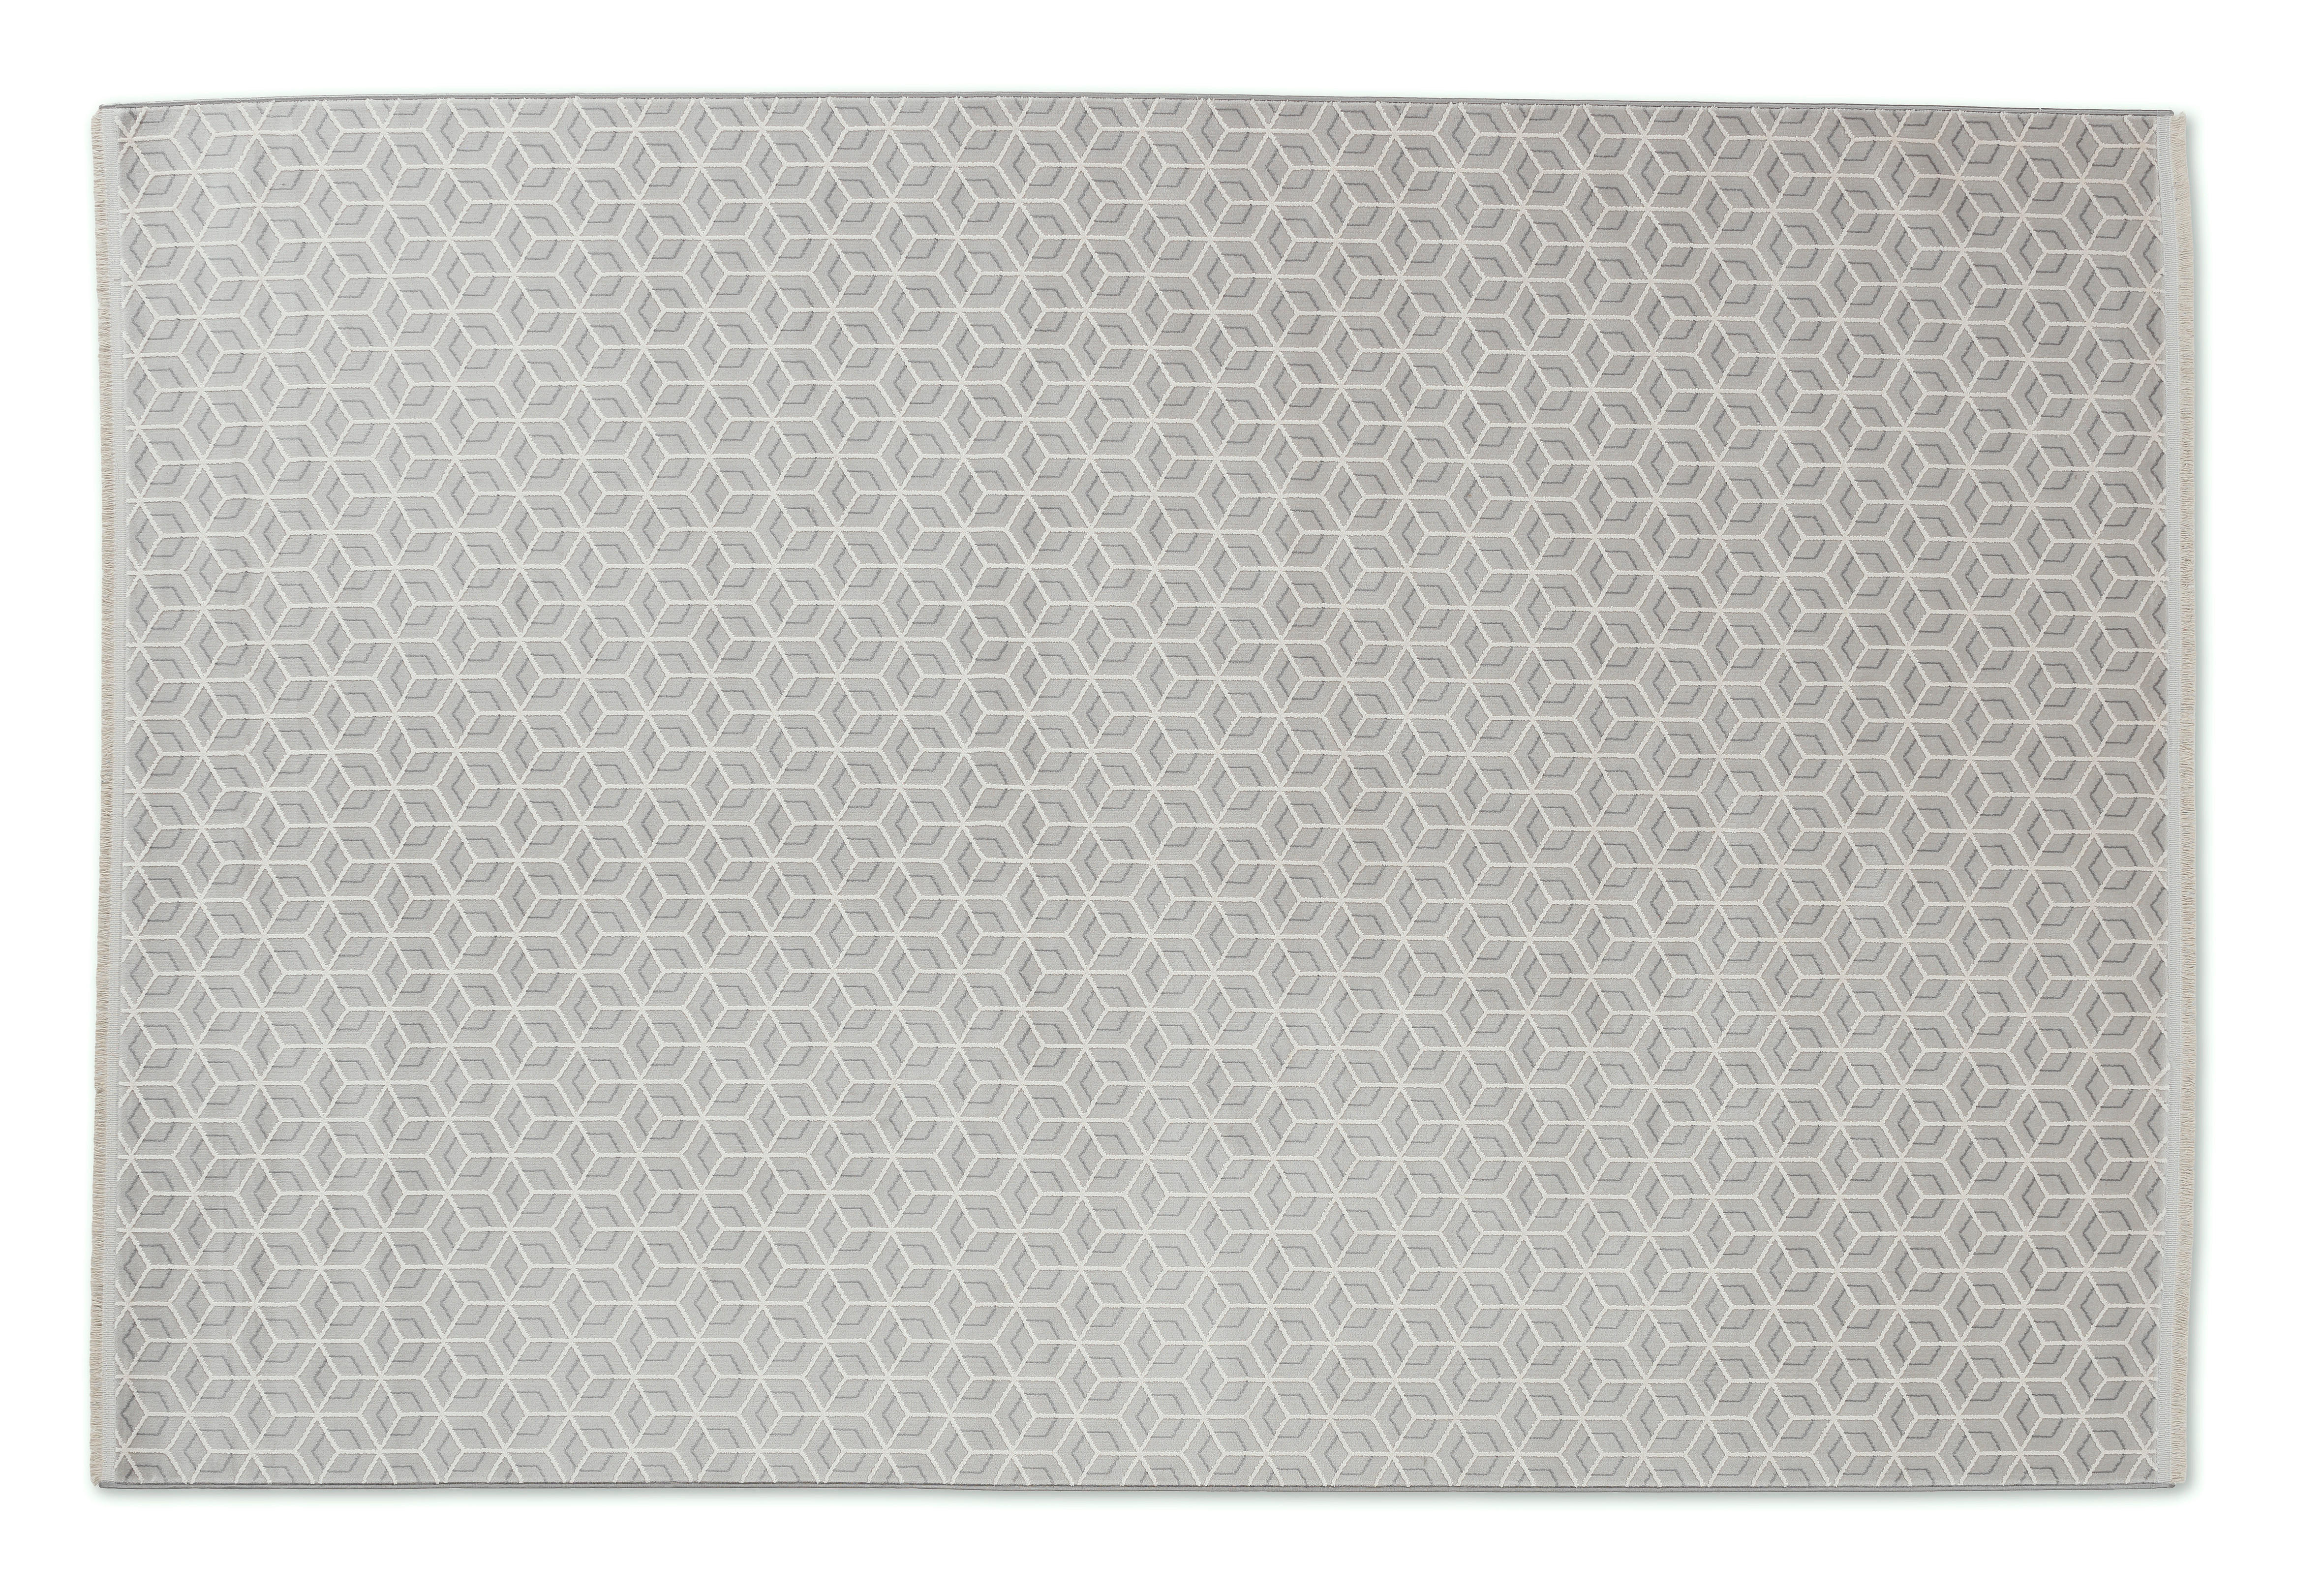 WEBTEPPICH 170/240 cm Metric  - Silberfarben, Design, Textil (170/240cm) - Joop!